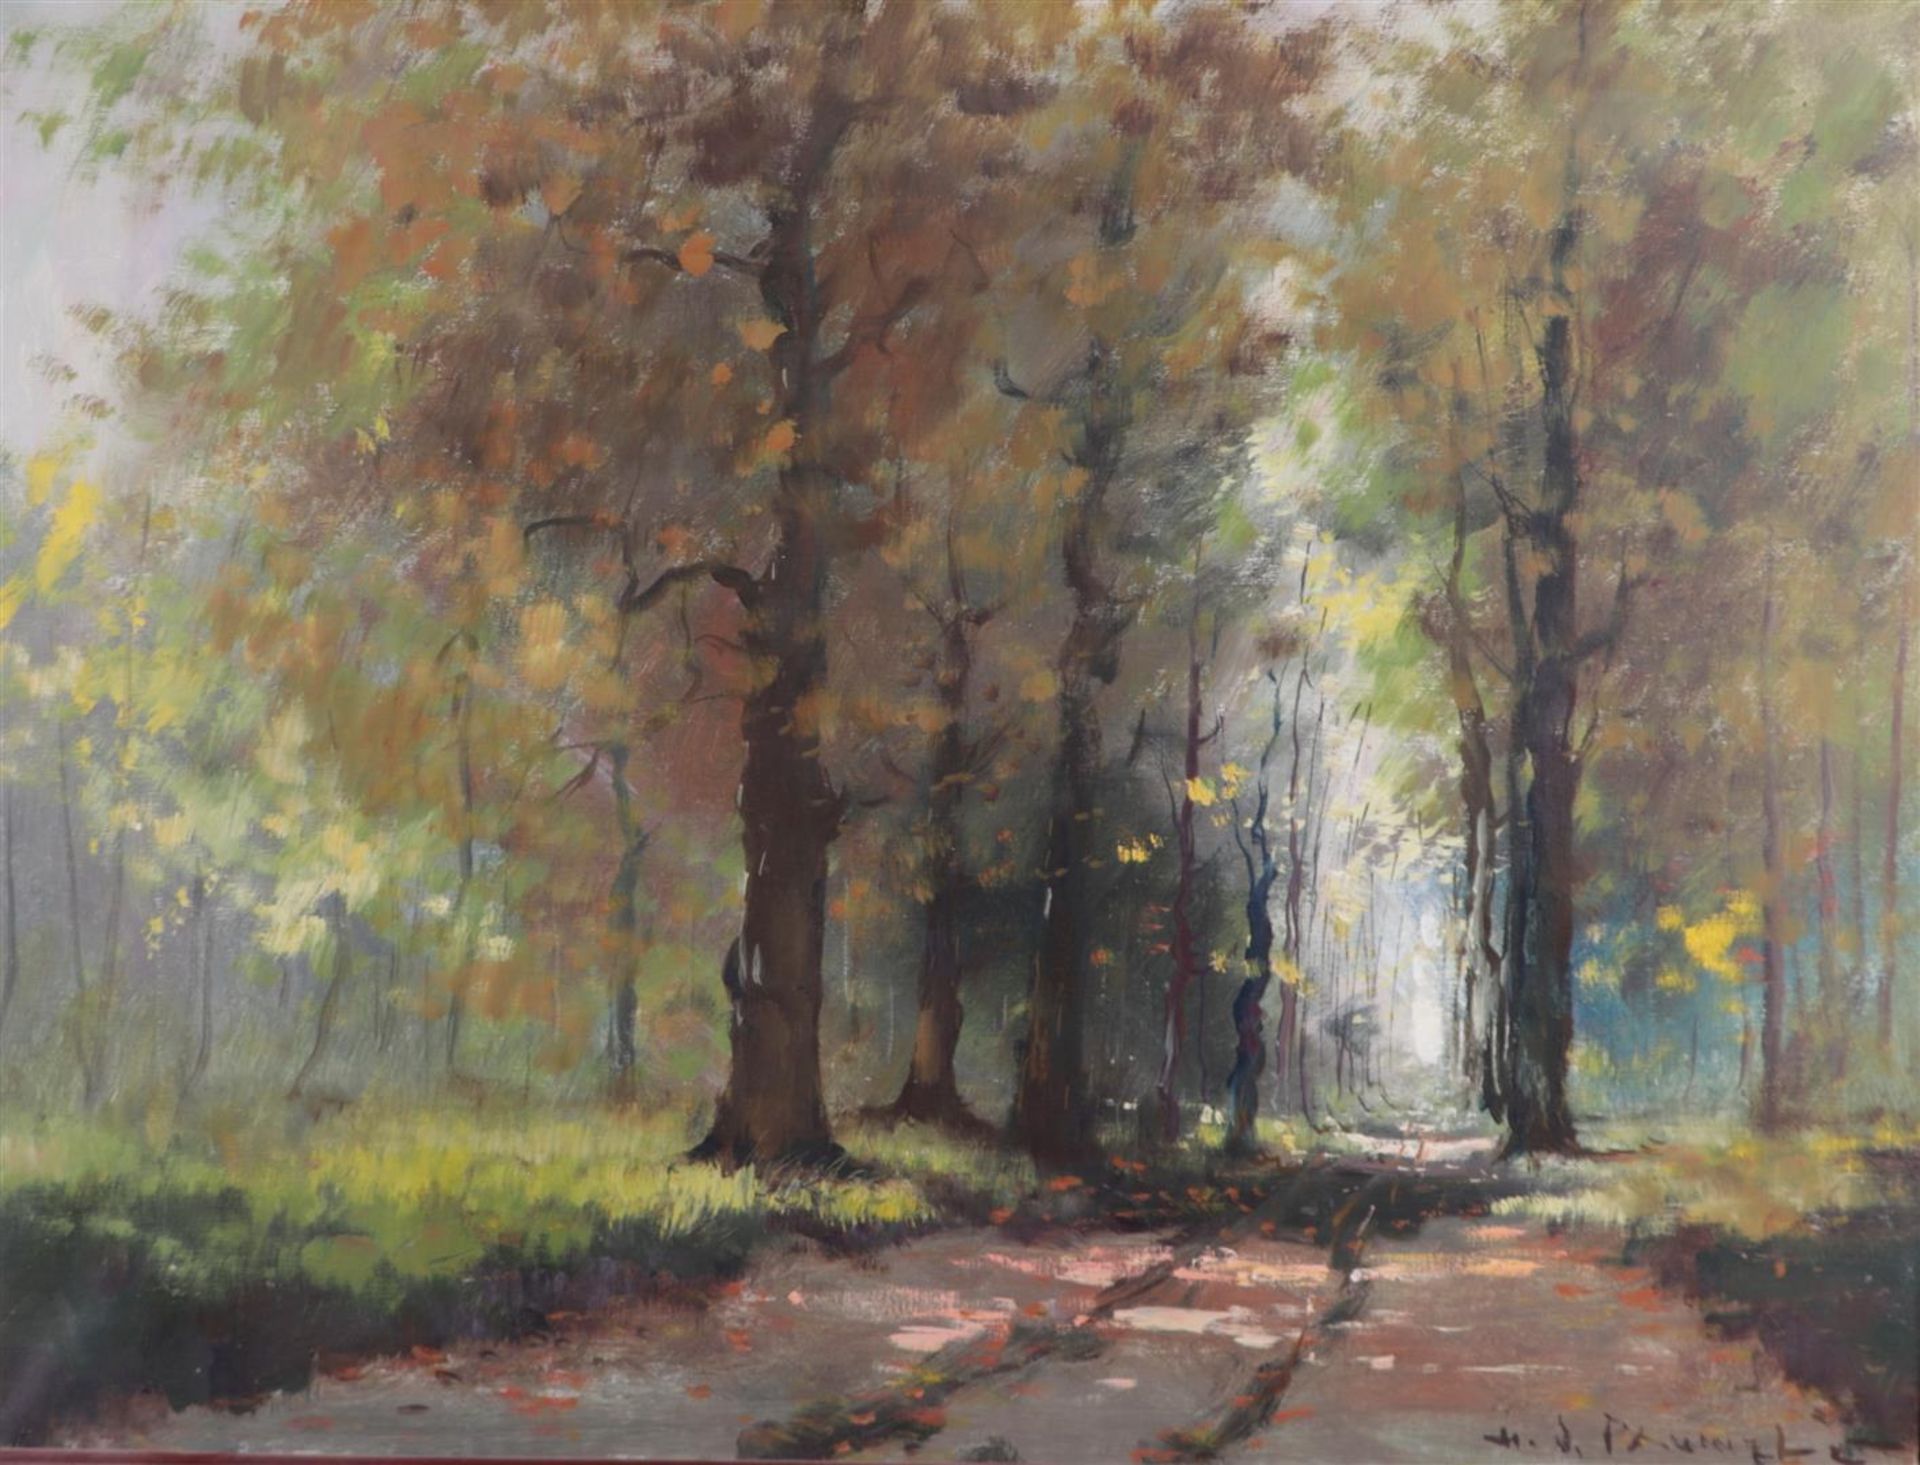 Henri Joseph Pauwels (1903 - 1983), Forrest lane, signed (lower right), oil on canvas,
65 x 85 cm.